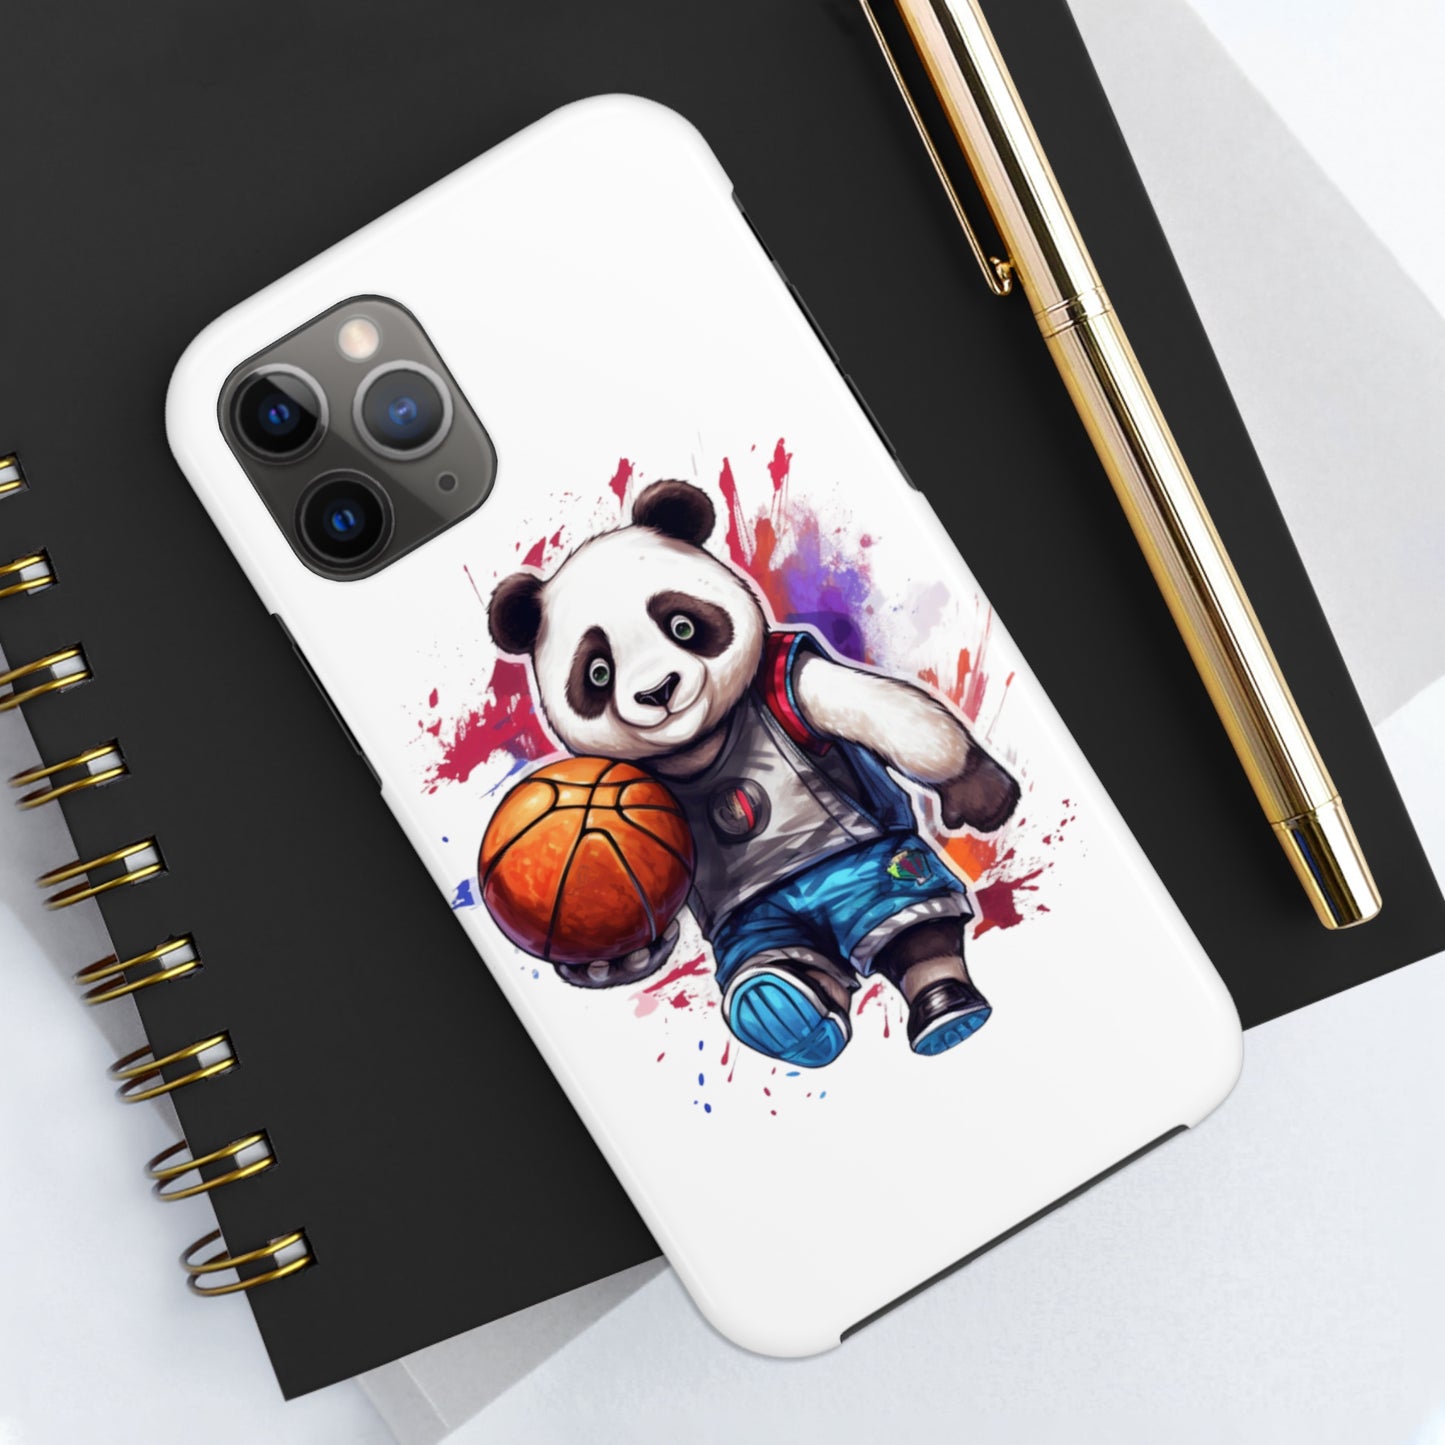 Bam-Boozled: A Sporty Comic Panda Playing Basketball with a Bamboo Ball